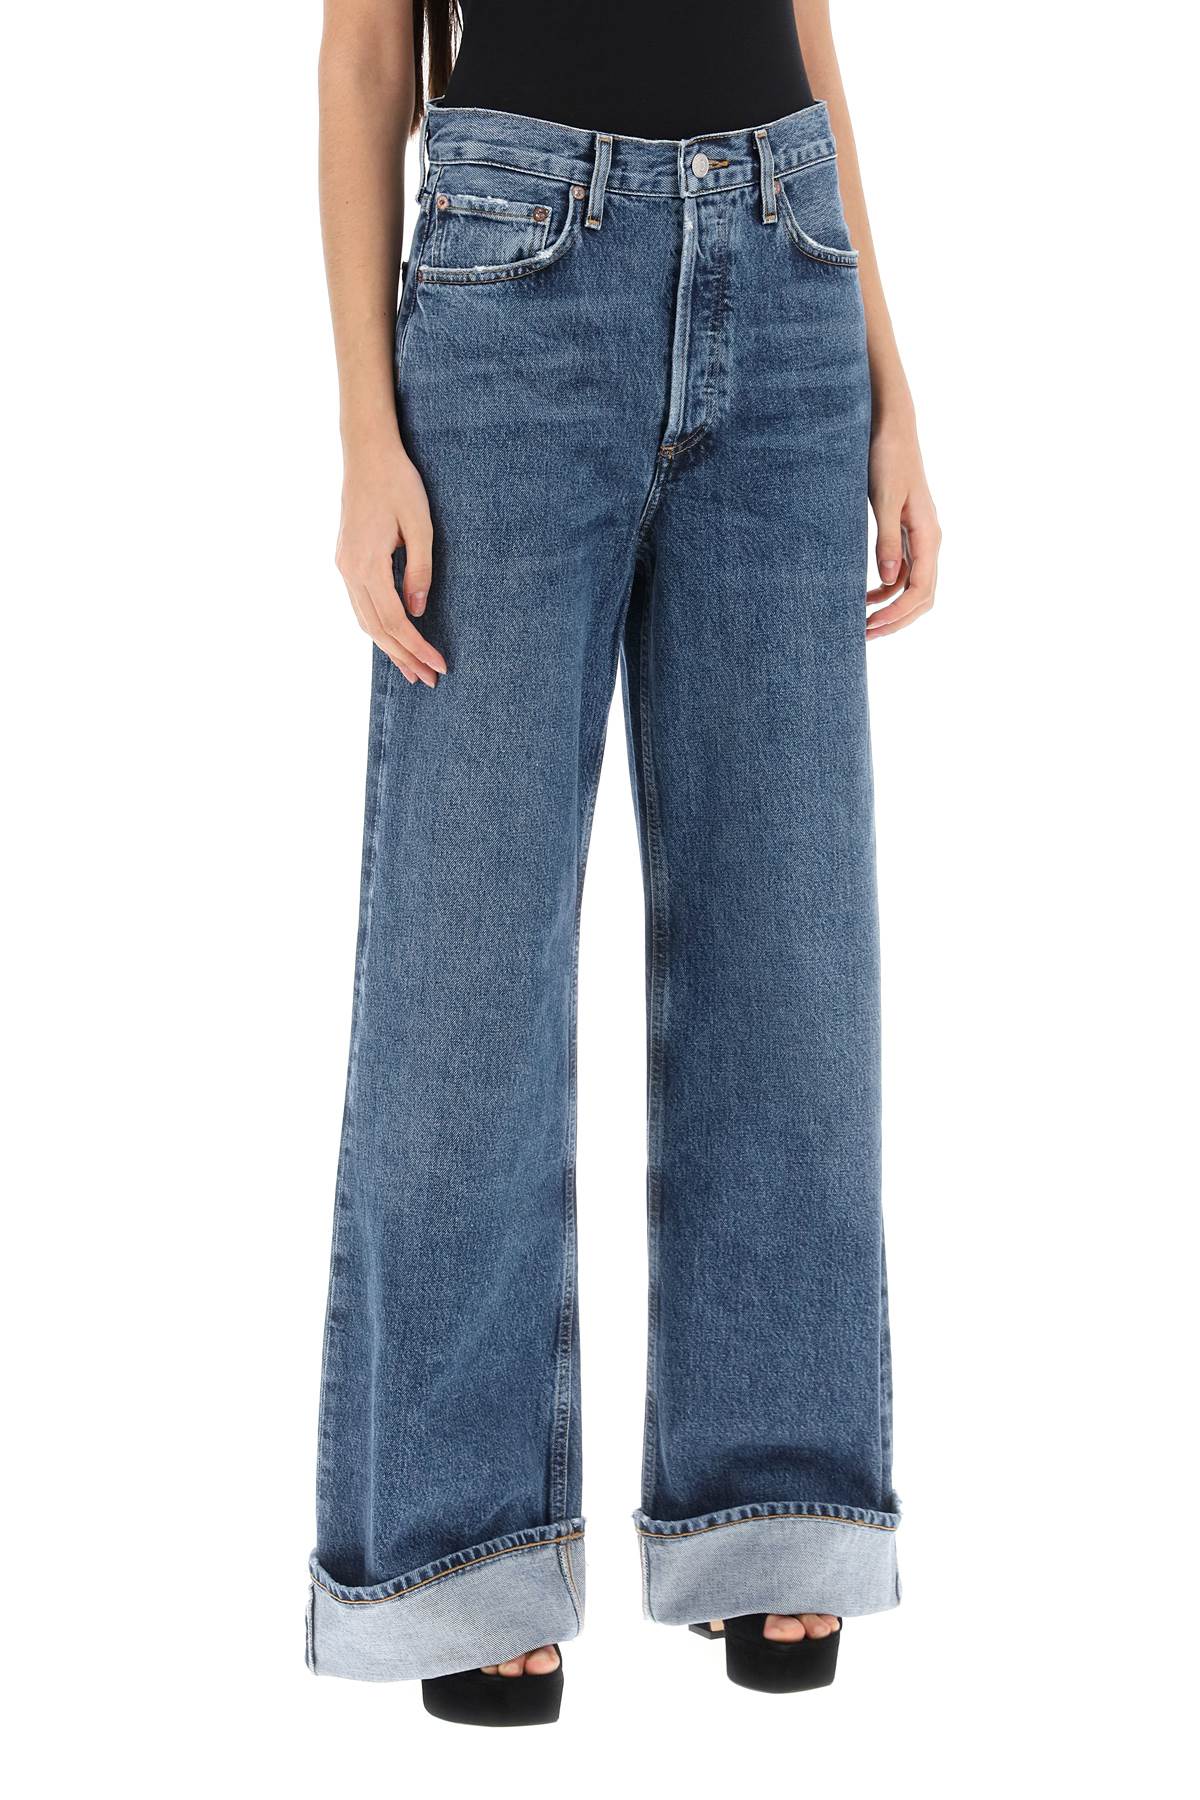 Agolde dame wide leg jeans-1